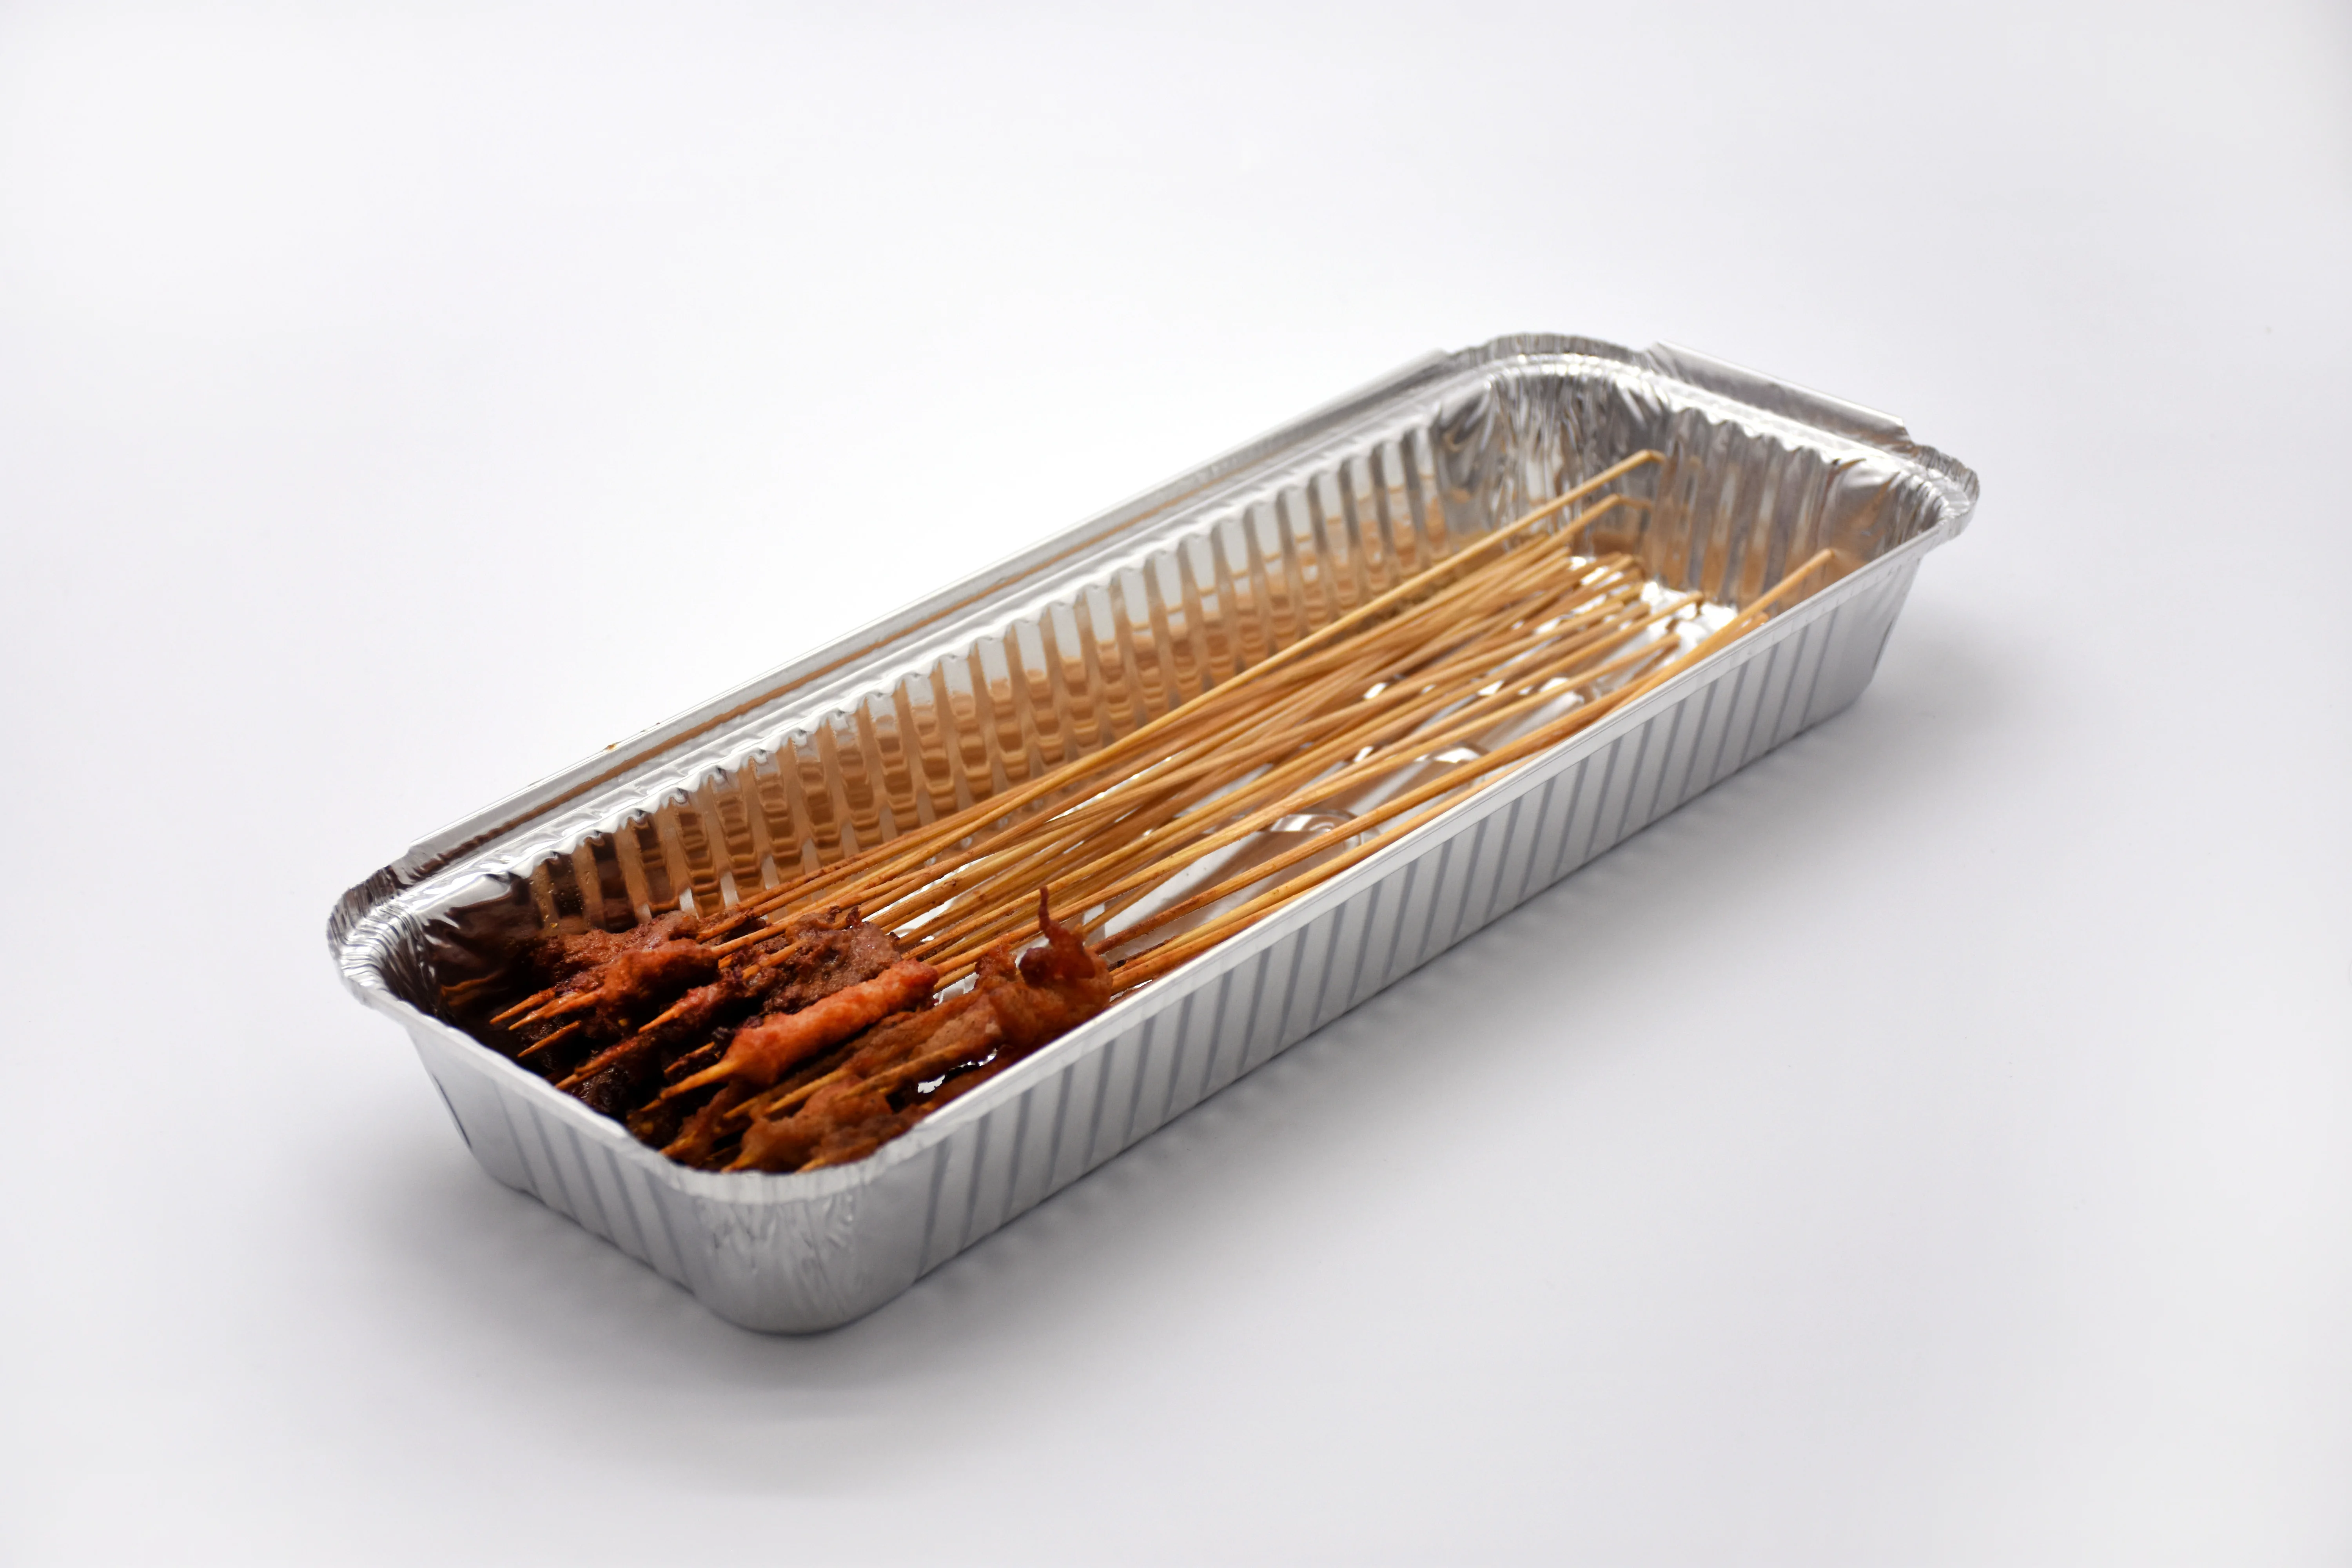 https://ae01.alicdn.com/kf/Ha9683300e2d9484ebe91132c034540eaV/PERFECT-Disposable-Barbecue-Mutton-String-Tin-Foil-Lunch-Box-With-Rectangular-Aluminum-Foil-BBQ-String-Takeout.jpg